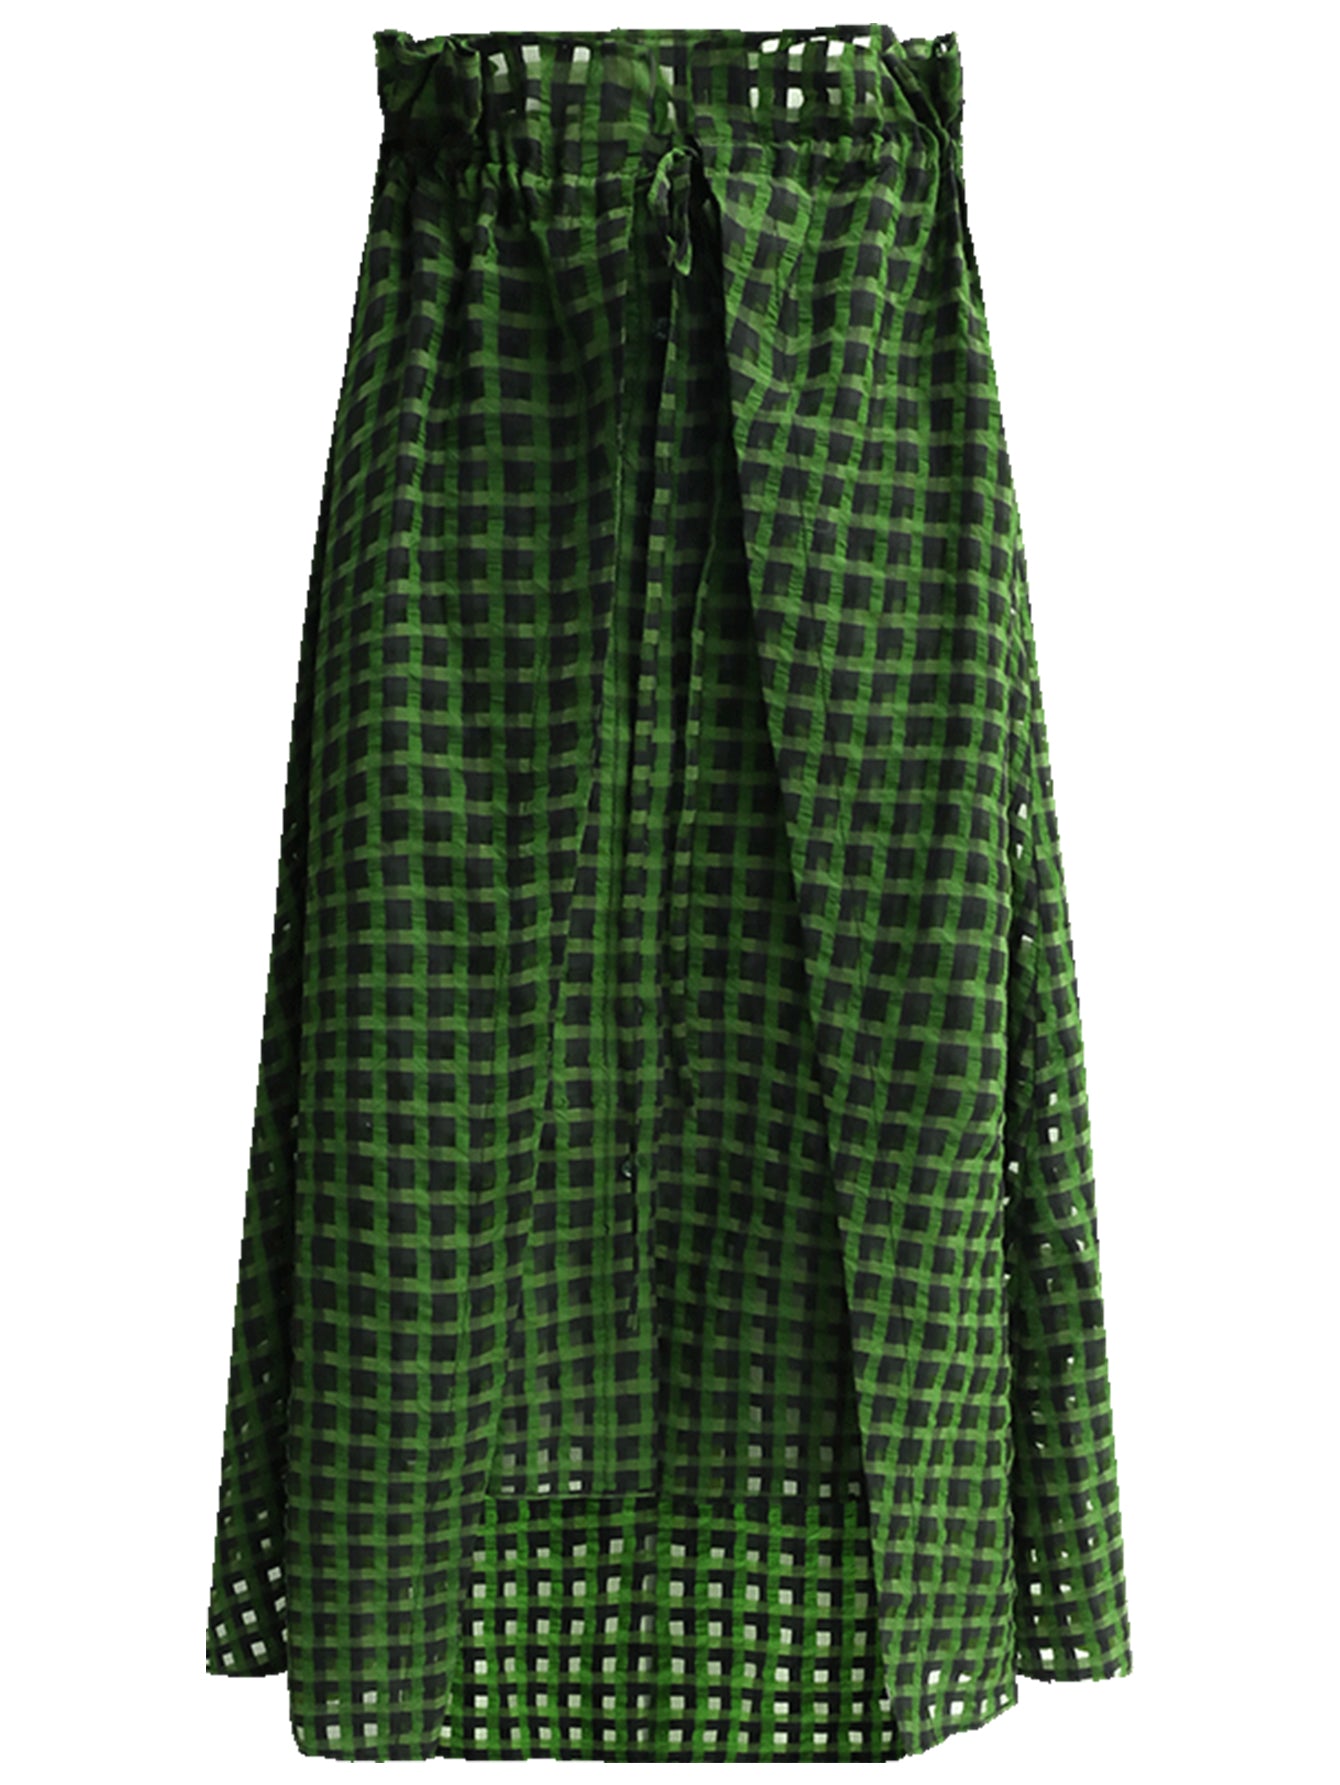 semi-sheer-checkered-green-skirt_all_green_4.jpg